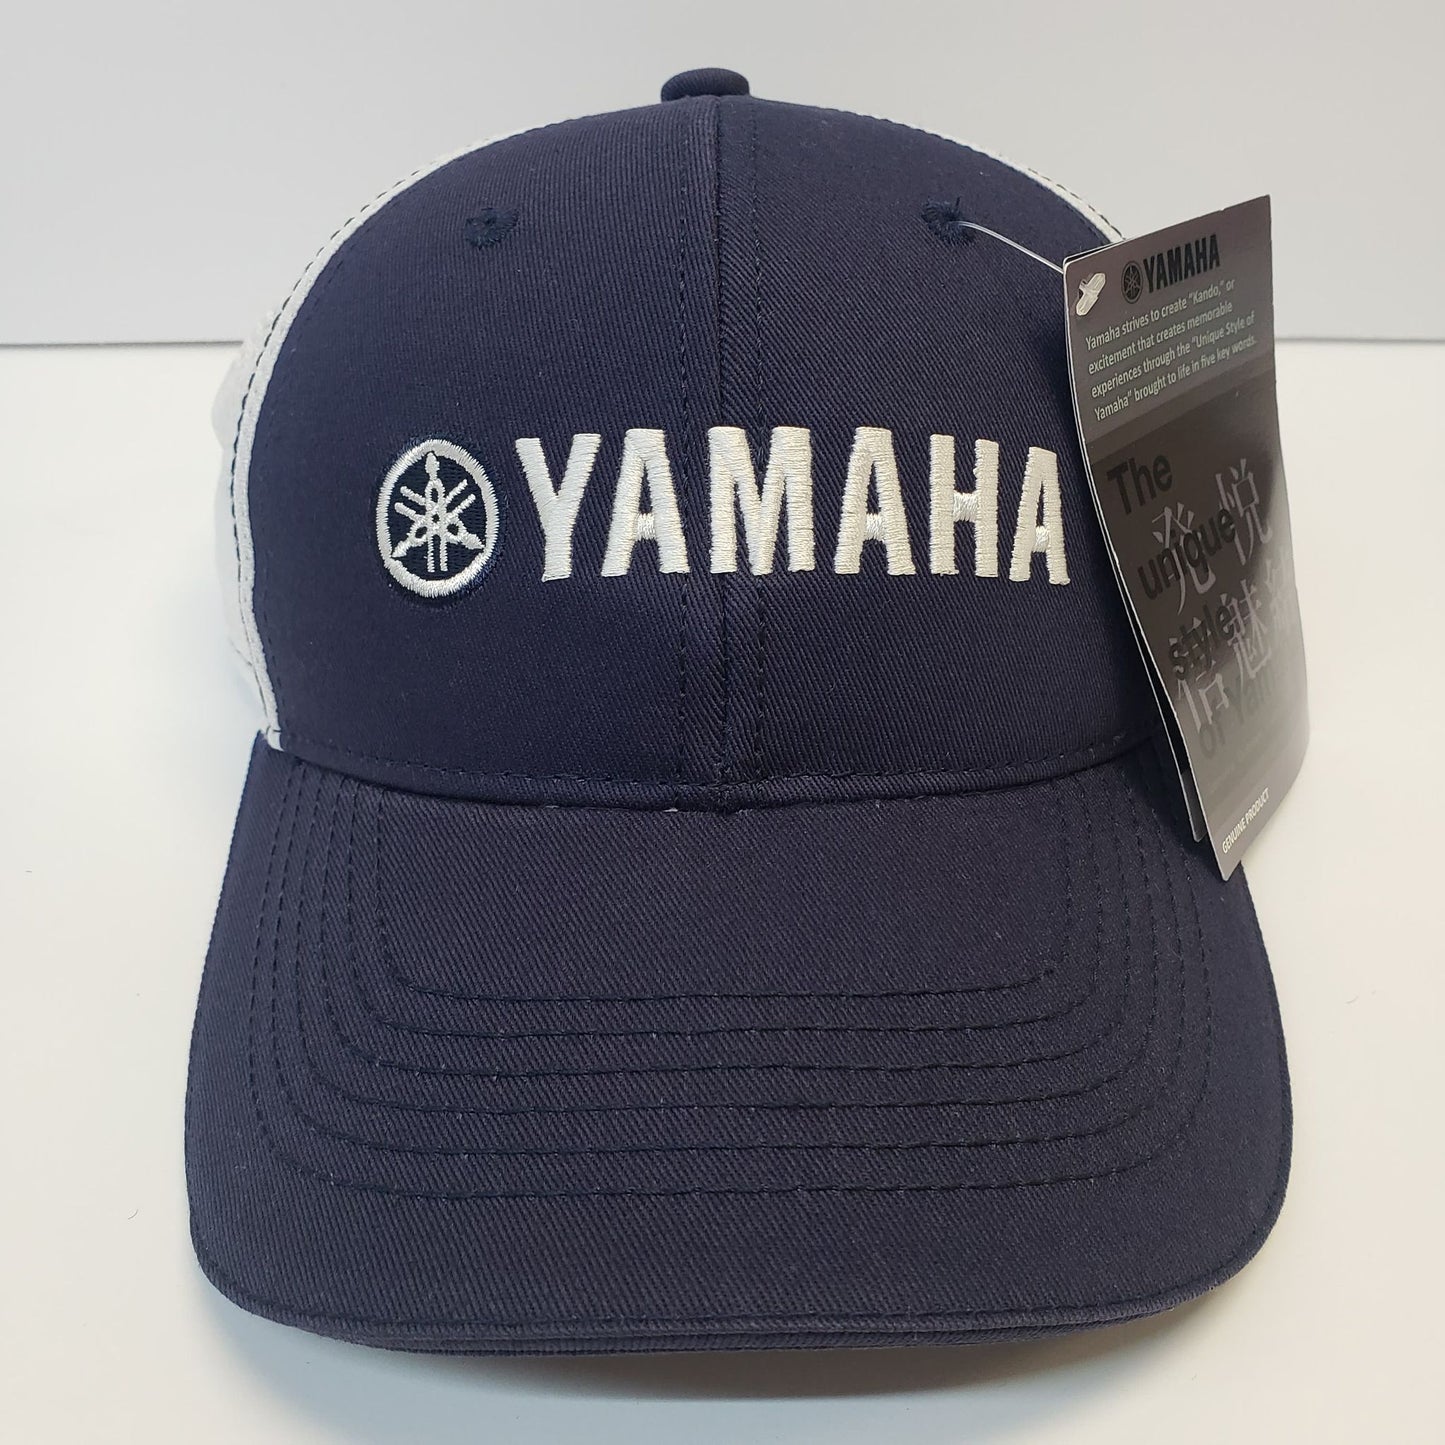 New Authentic Yamaha Hat-Navy Blue/White Twill Cloth